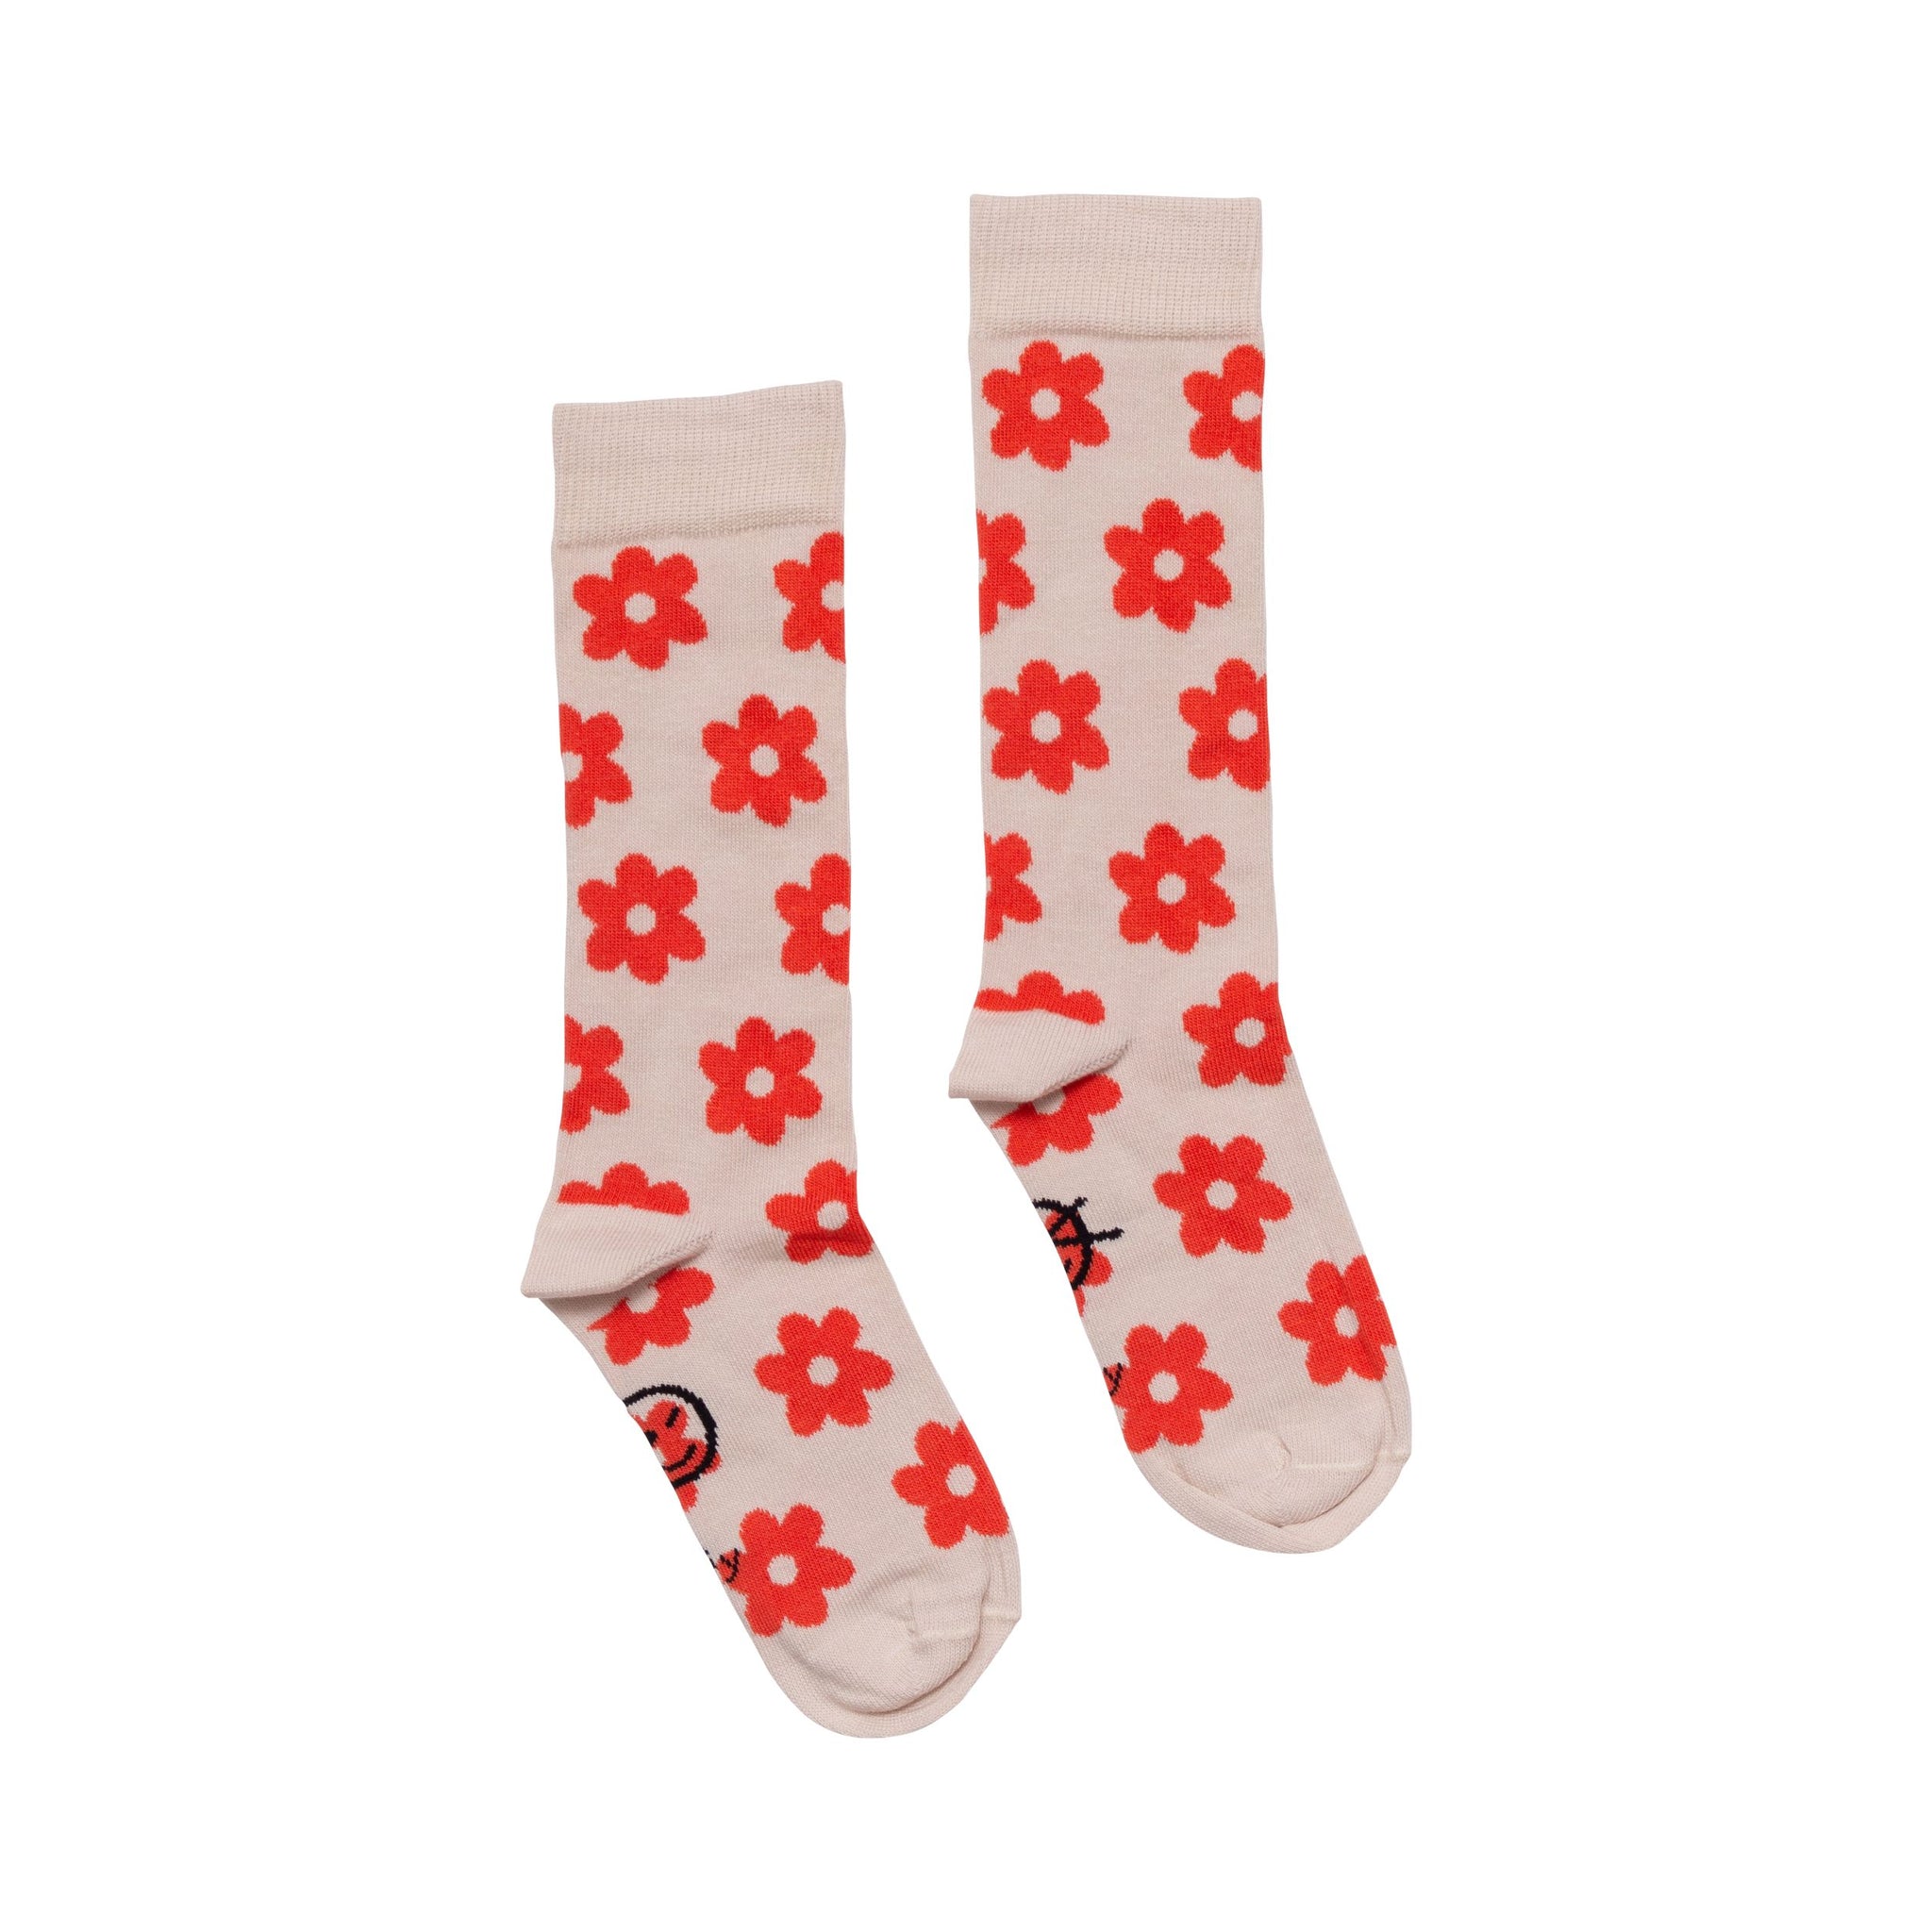 Flower Sock - Warm White / Red